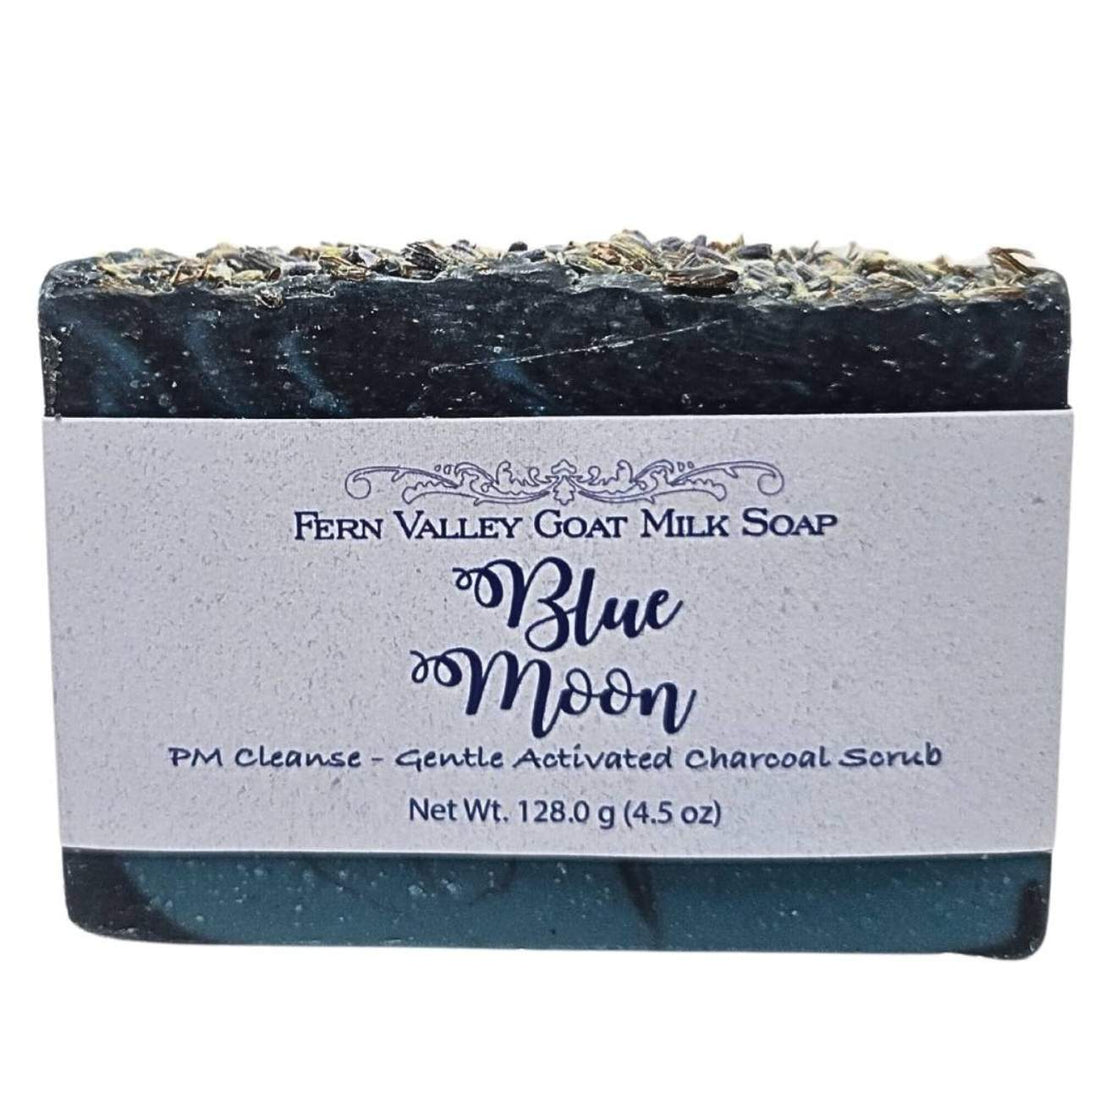 Natural Goat Milk Soap | Charcoal Exfoliating Scrub | Blue Moon PM Cleanse